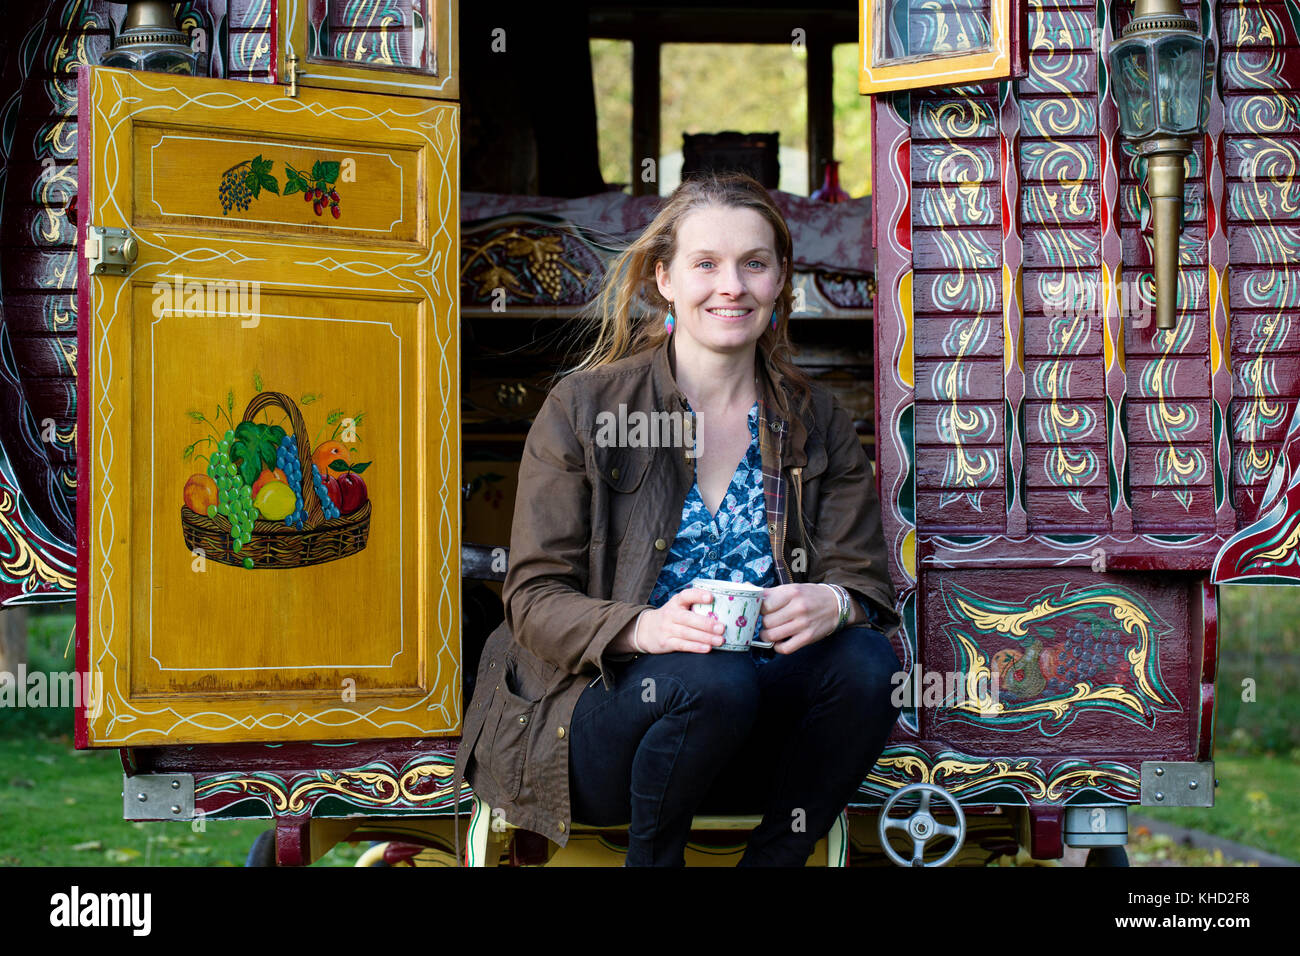 Woman sitting on traditional gypsy caravan, portrait Stock Photo